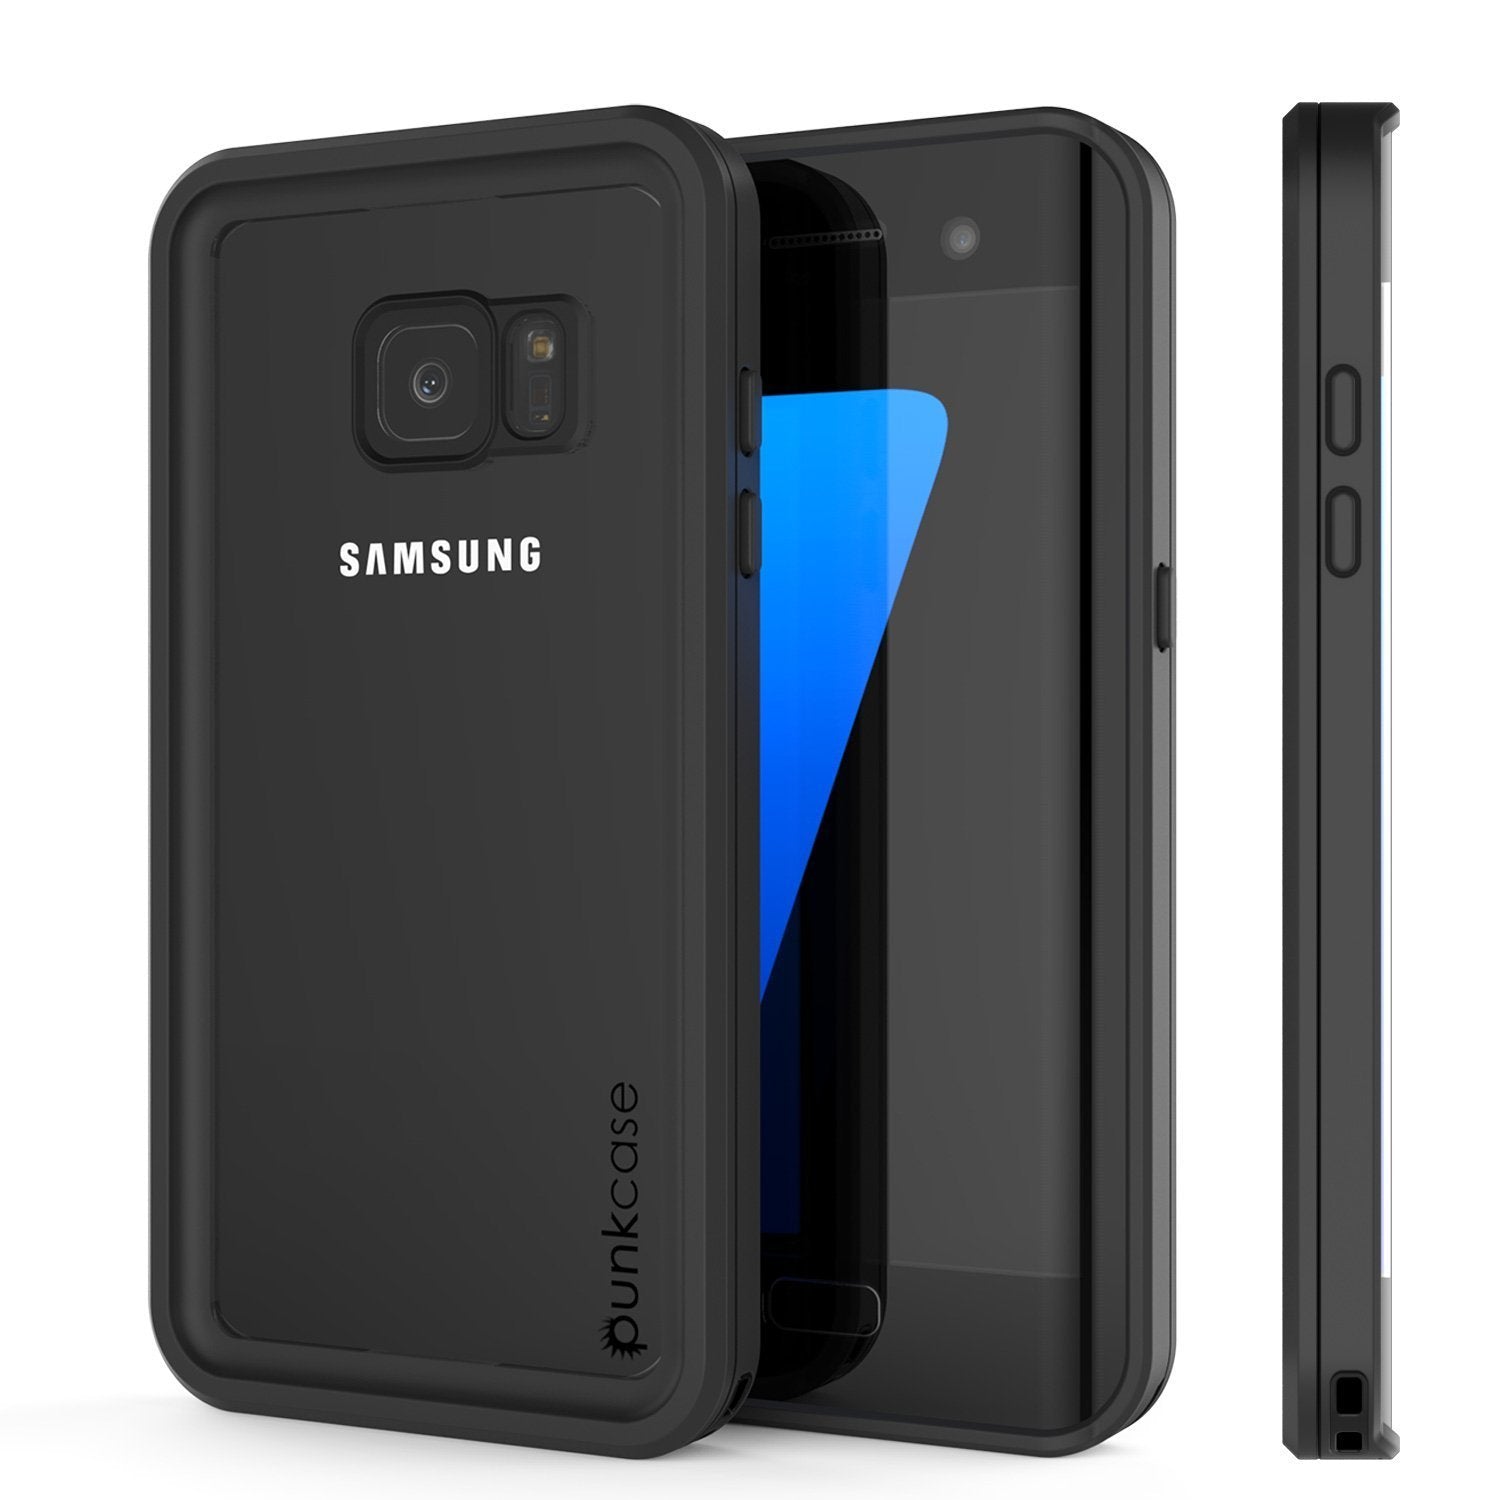 Galaxy S7 Edge Waterproof Case, Punkcase [Extreme Series] [Slim Fit] [IP68 Certified] [Shockproof] [Snowproof] [Dirproof] Armor Cover [BLACK] (Color in image: Black)